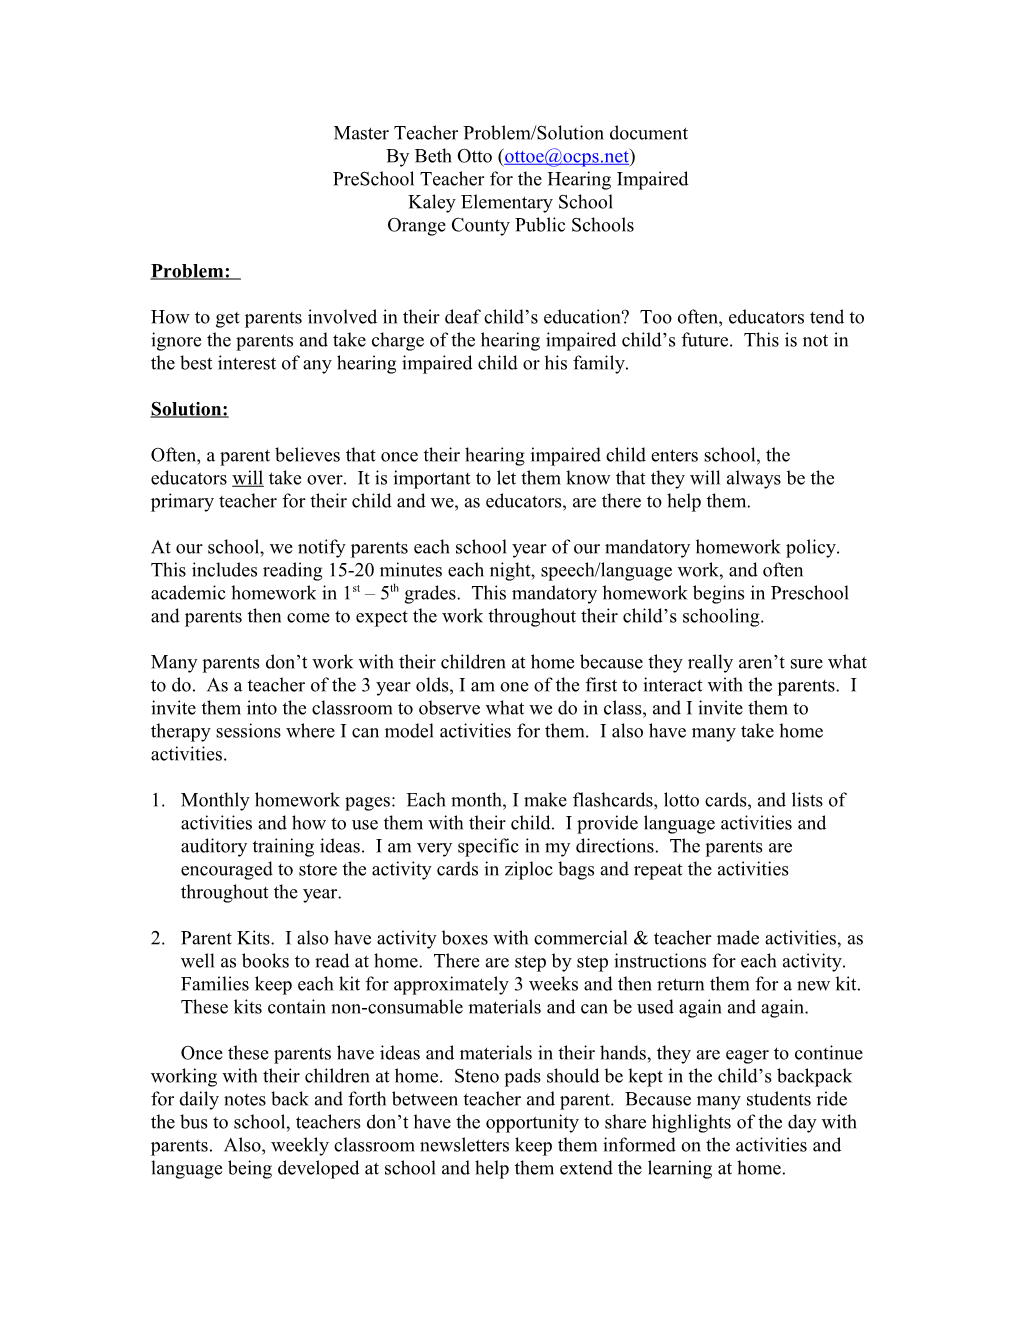 Master Teacher Problem/Solution Document